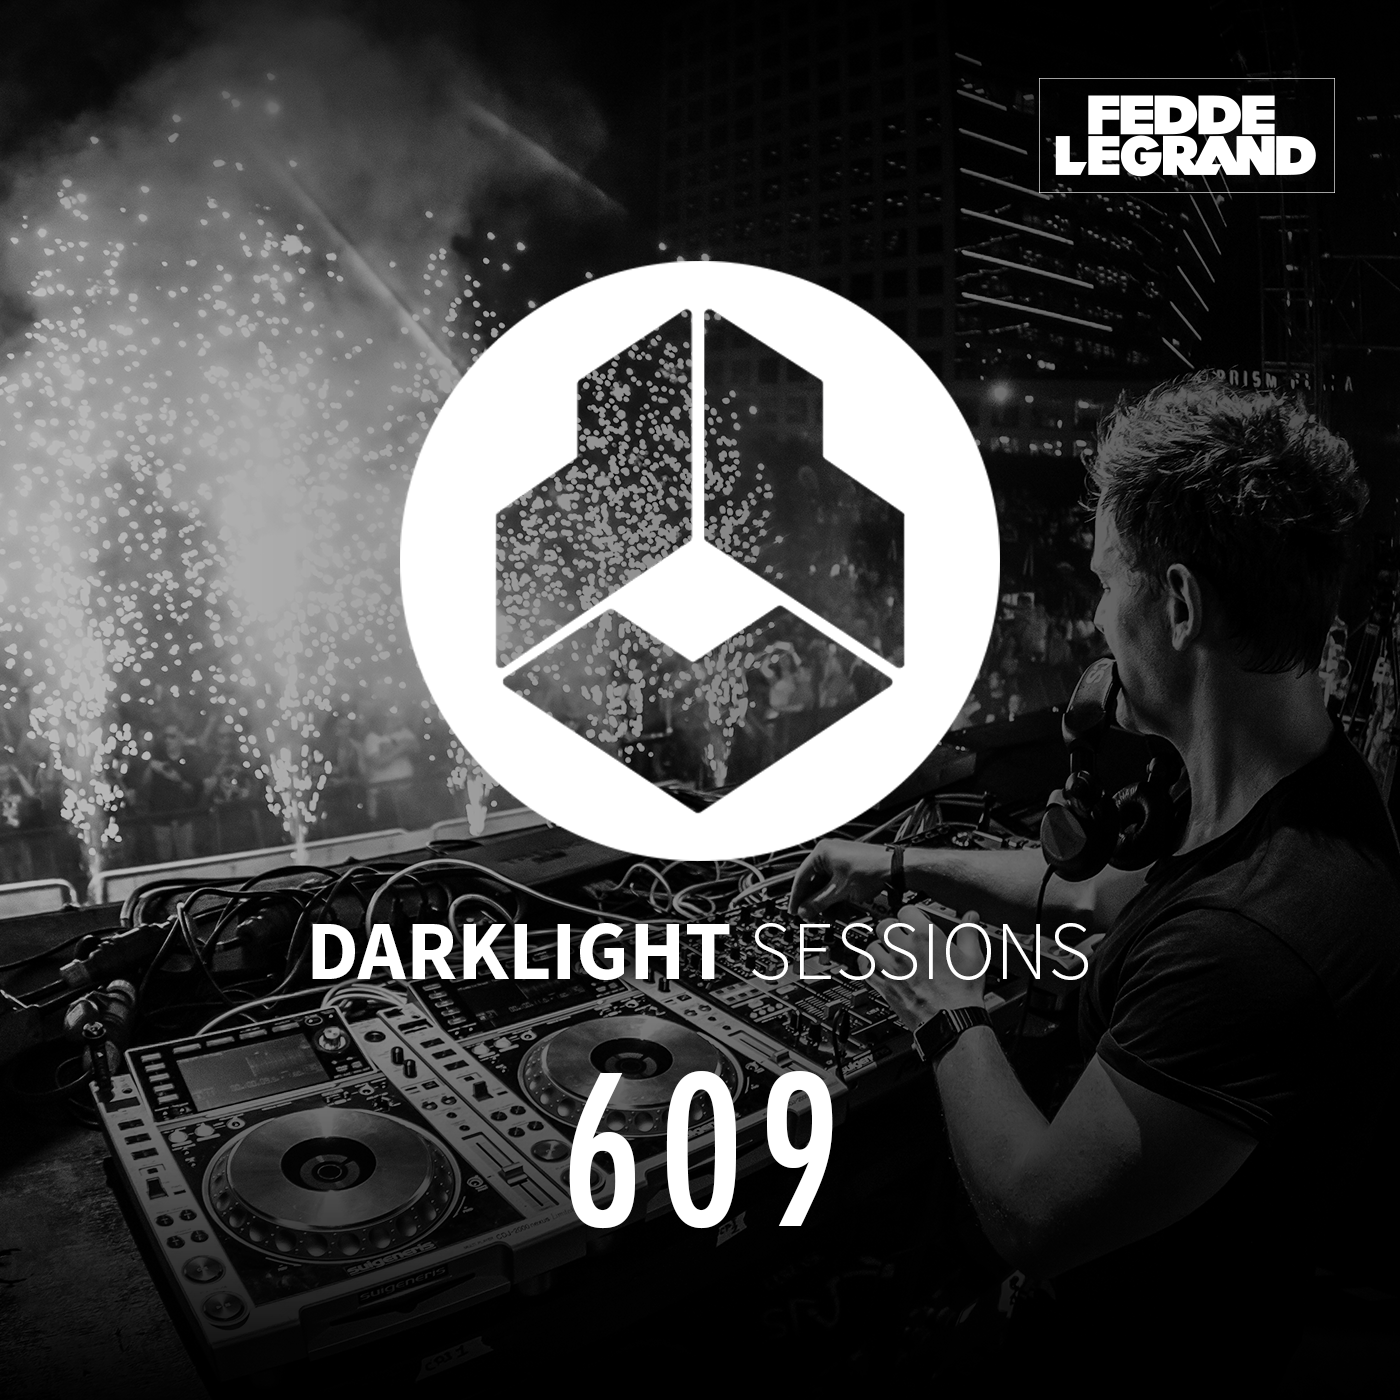 Darklight Sessions 609